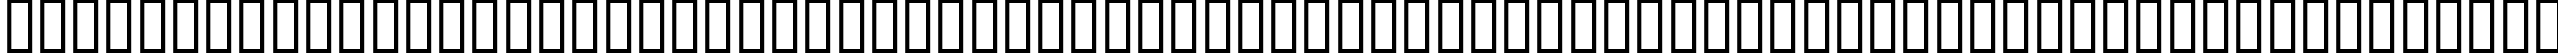 Пример написания английского алфавита шрифтом BD Sirca RMX